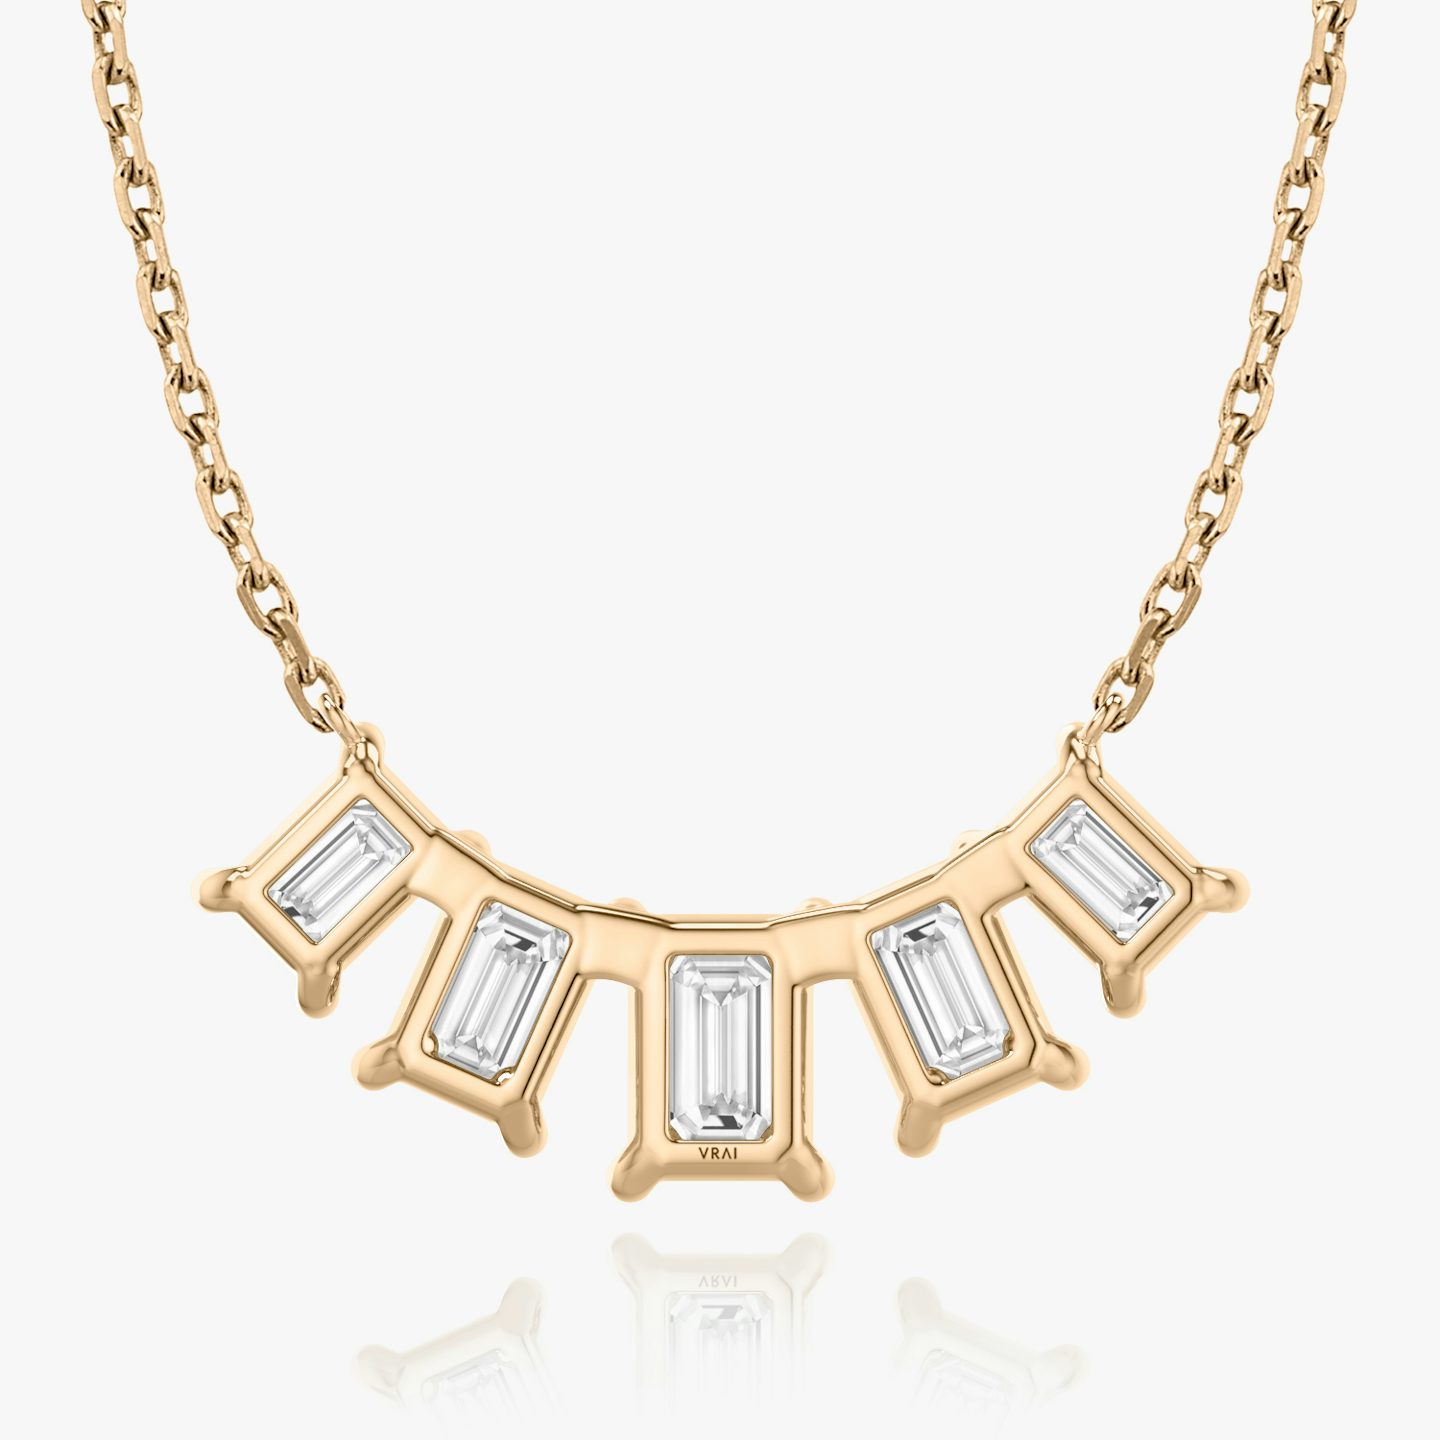 undefined | Emerald | 14k | Rose Gold | diamondCount: 5 | diamondSize: large | chainLength: 16-18